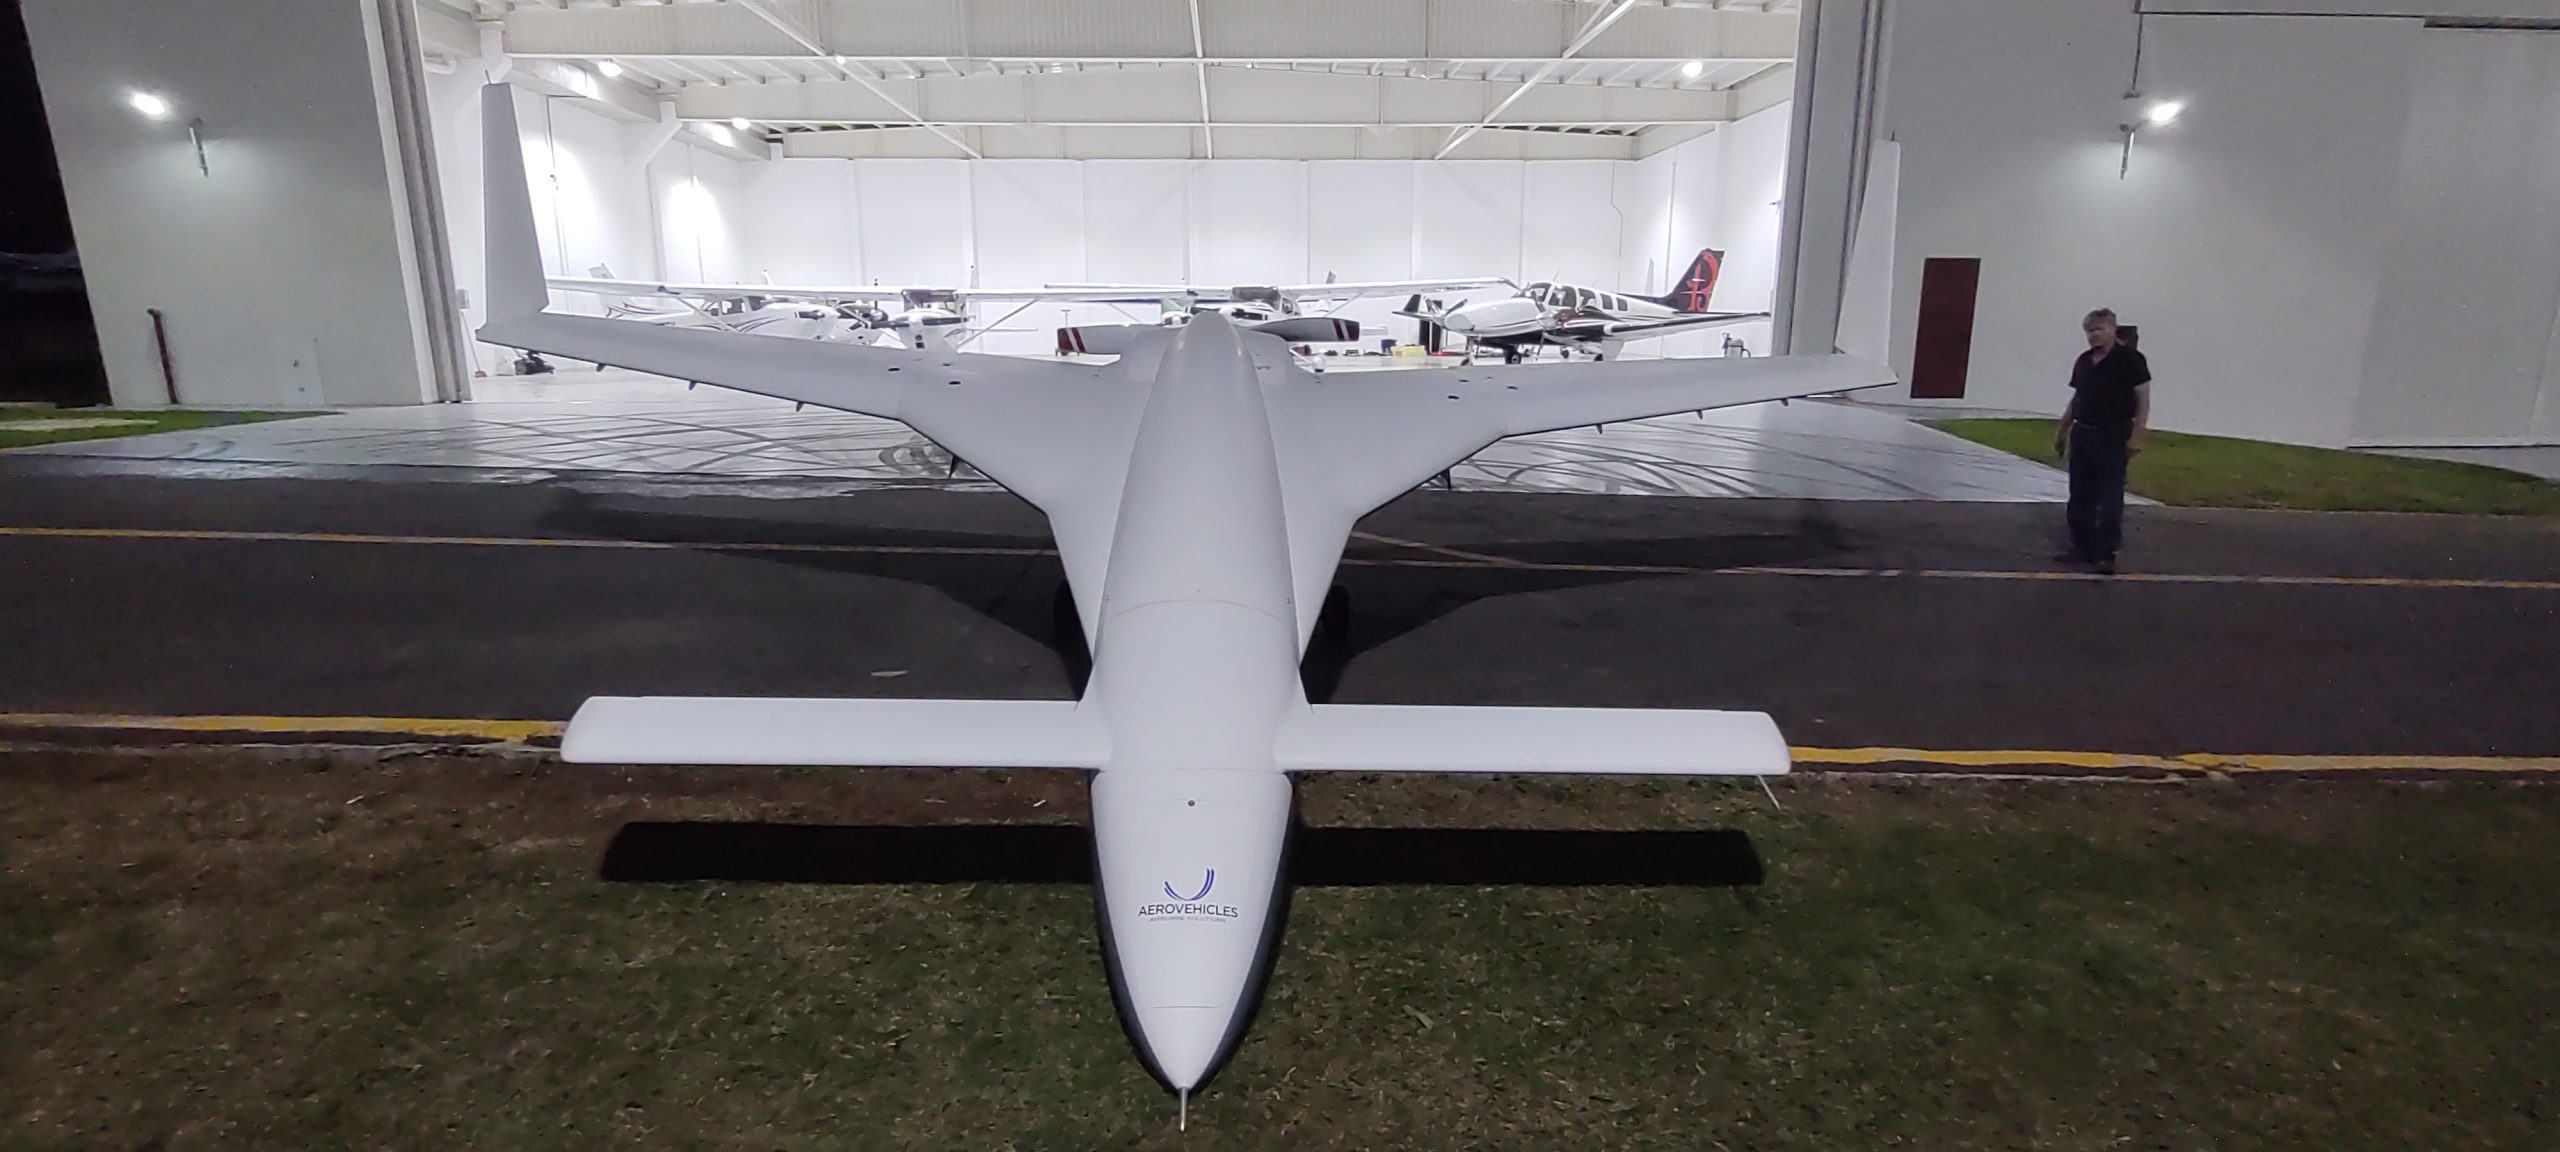 Berkut UAV Class III